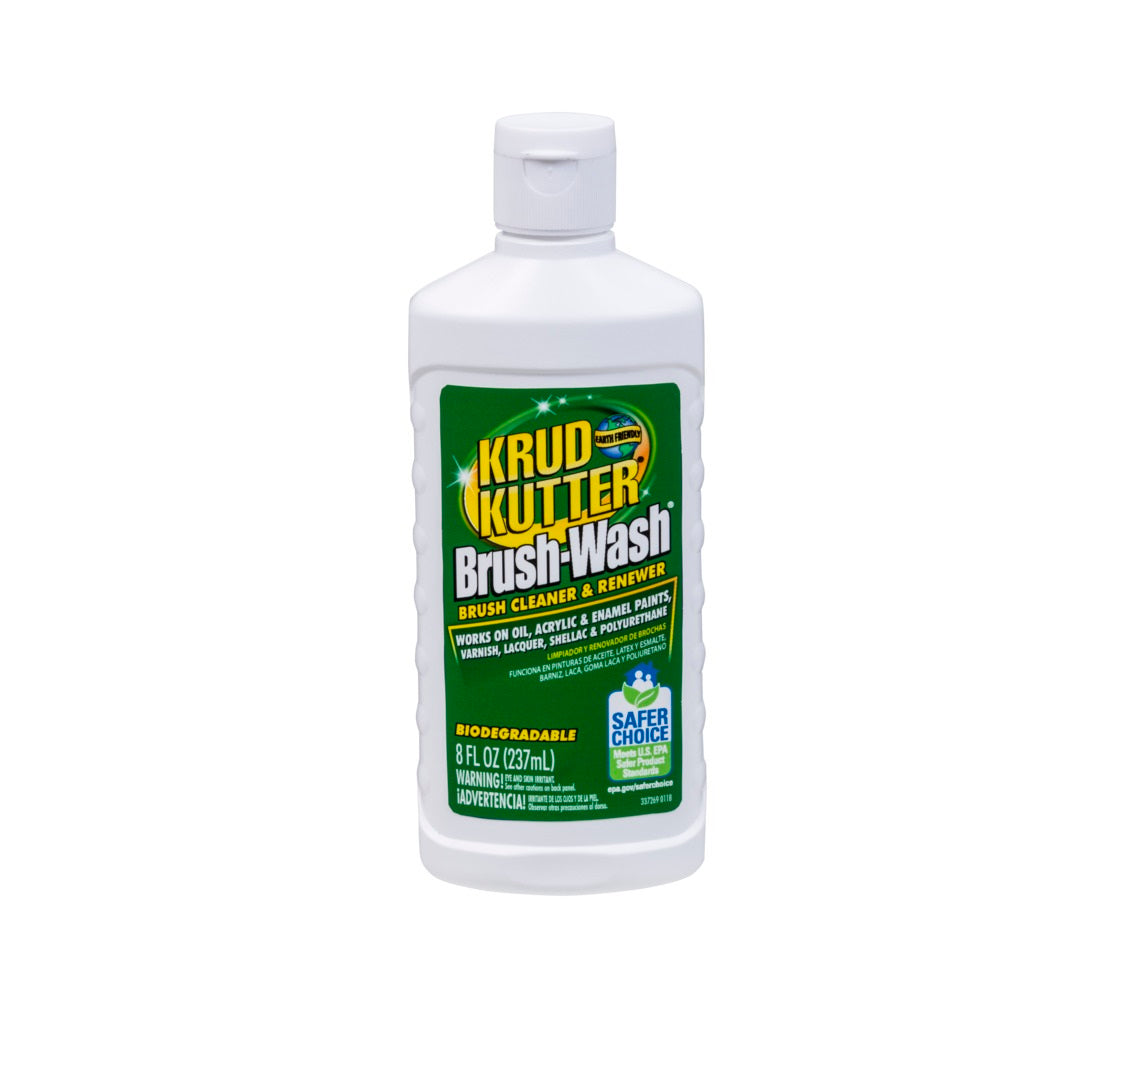 Krud Kutter 337231 Brush-Wash Cleaner & Renewer, 8 Oz